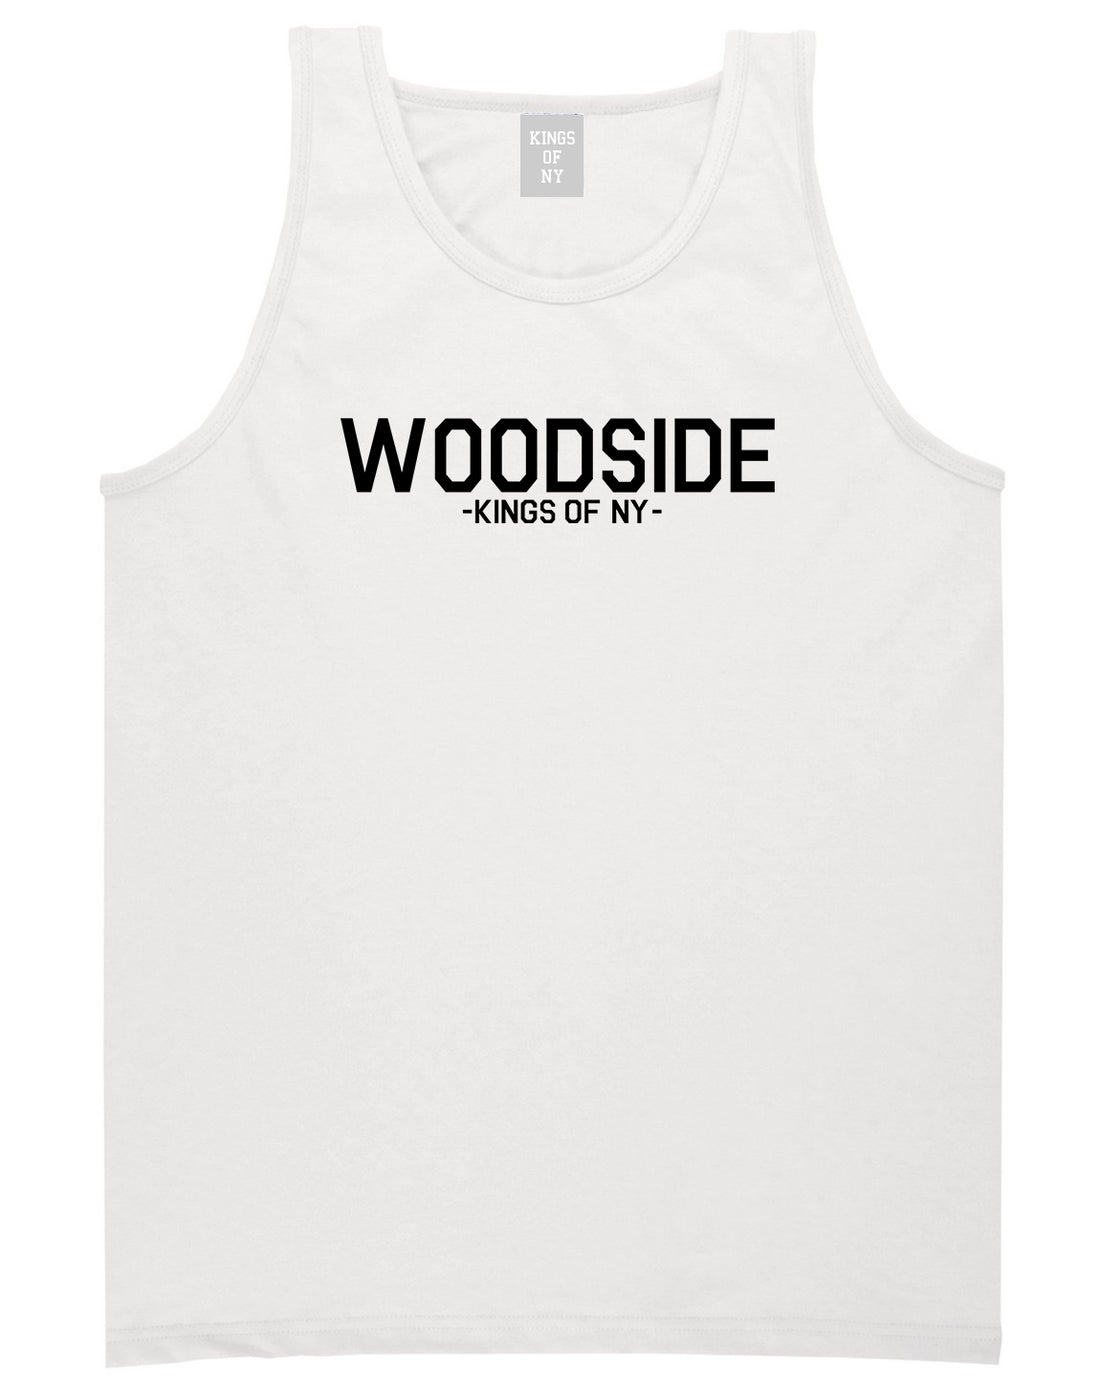 Woodside Queens New York Mens Tank Top Shirt White